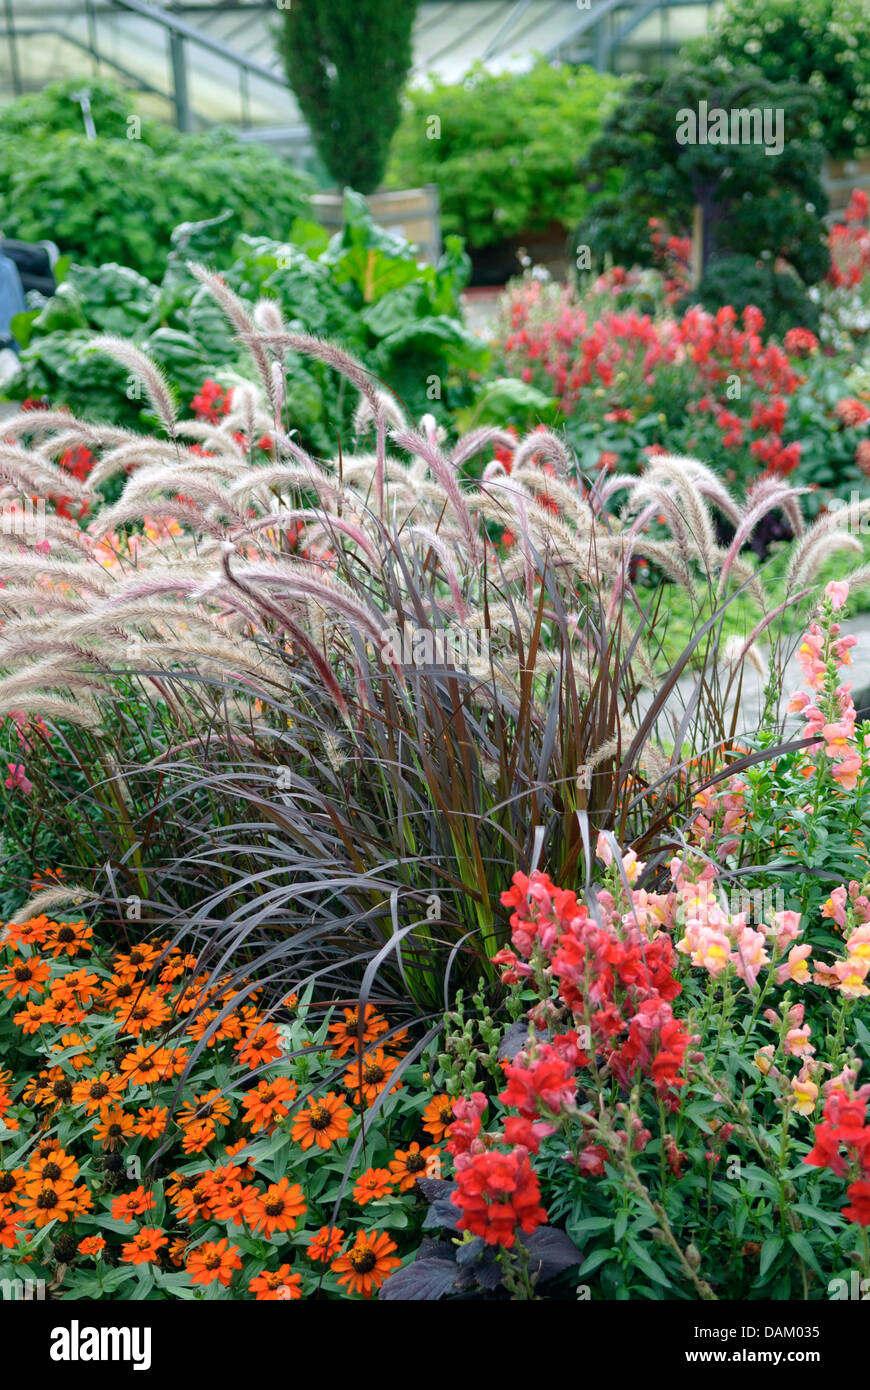 fountain grass, crimson fountaingrass (Pennisetum setaceum 'Rubrum', Pennisetum setaceum Rubrum), cultivar Rubrum Stock Photo